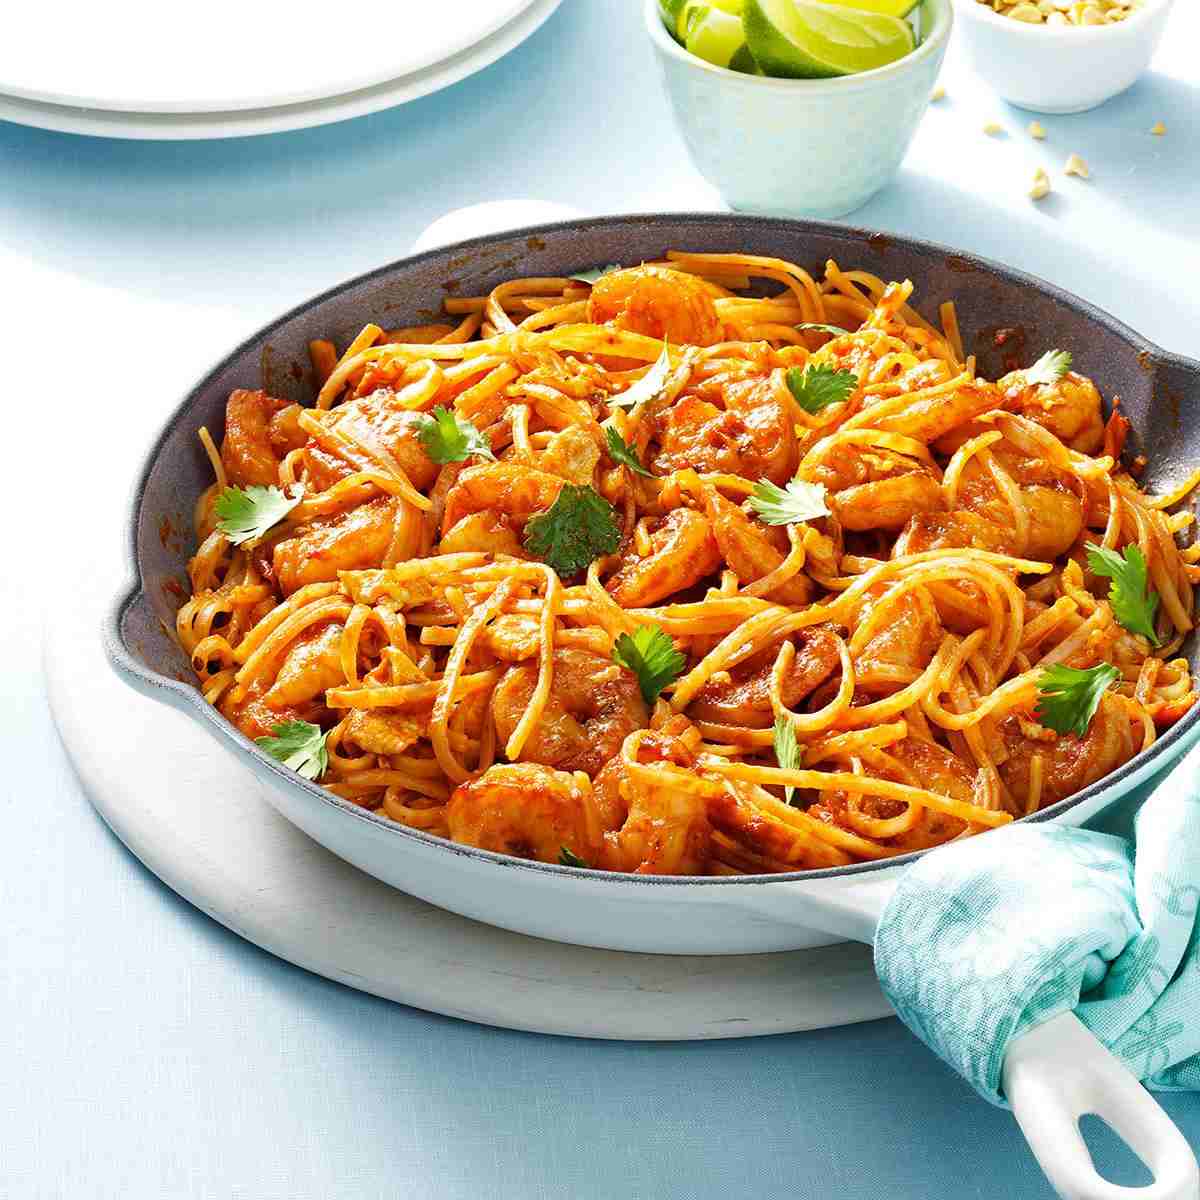 Make Shrimp Pasta Recipe Pad Thai Tomato Sauce Spaghetti self made